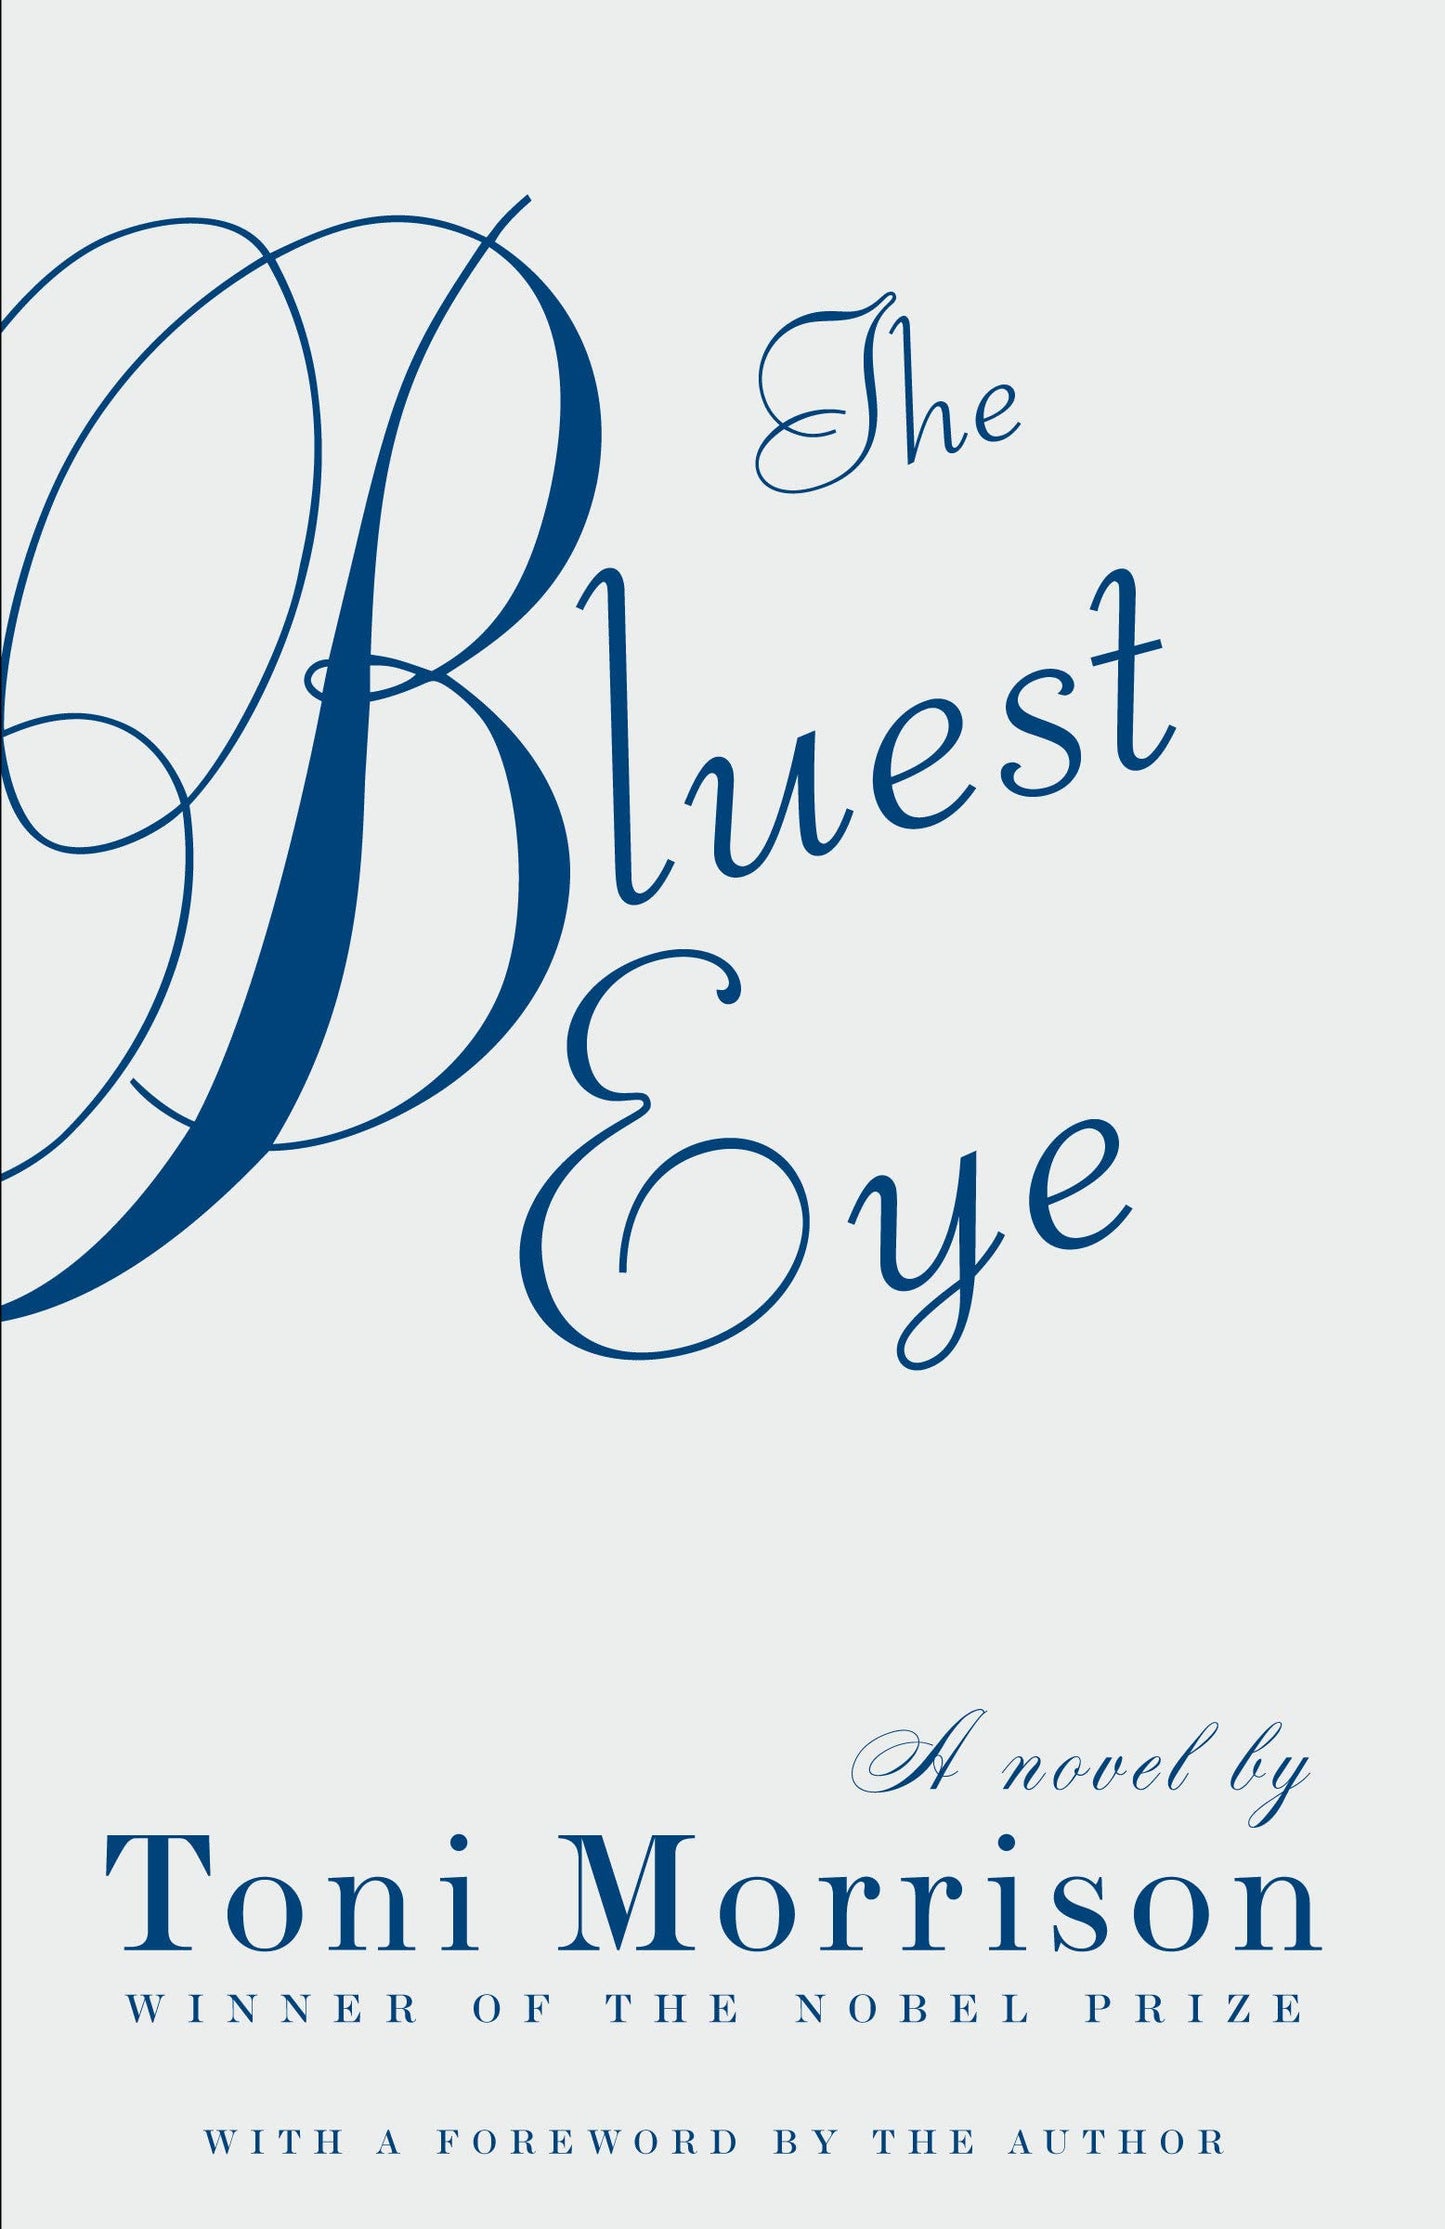 The Bluest Eye, by Toni Morrison